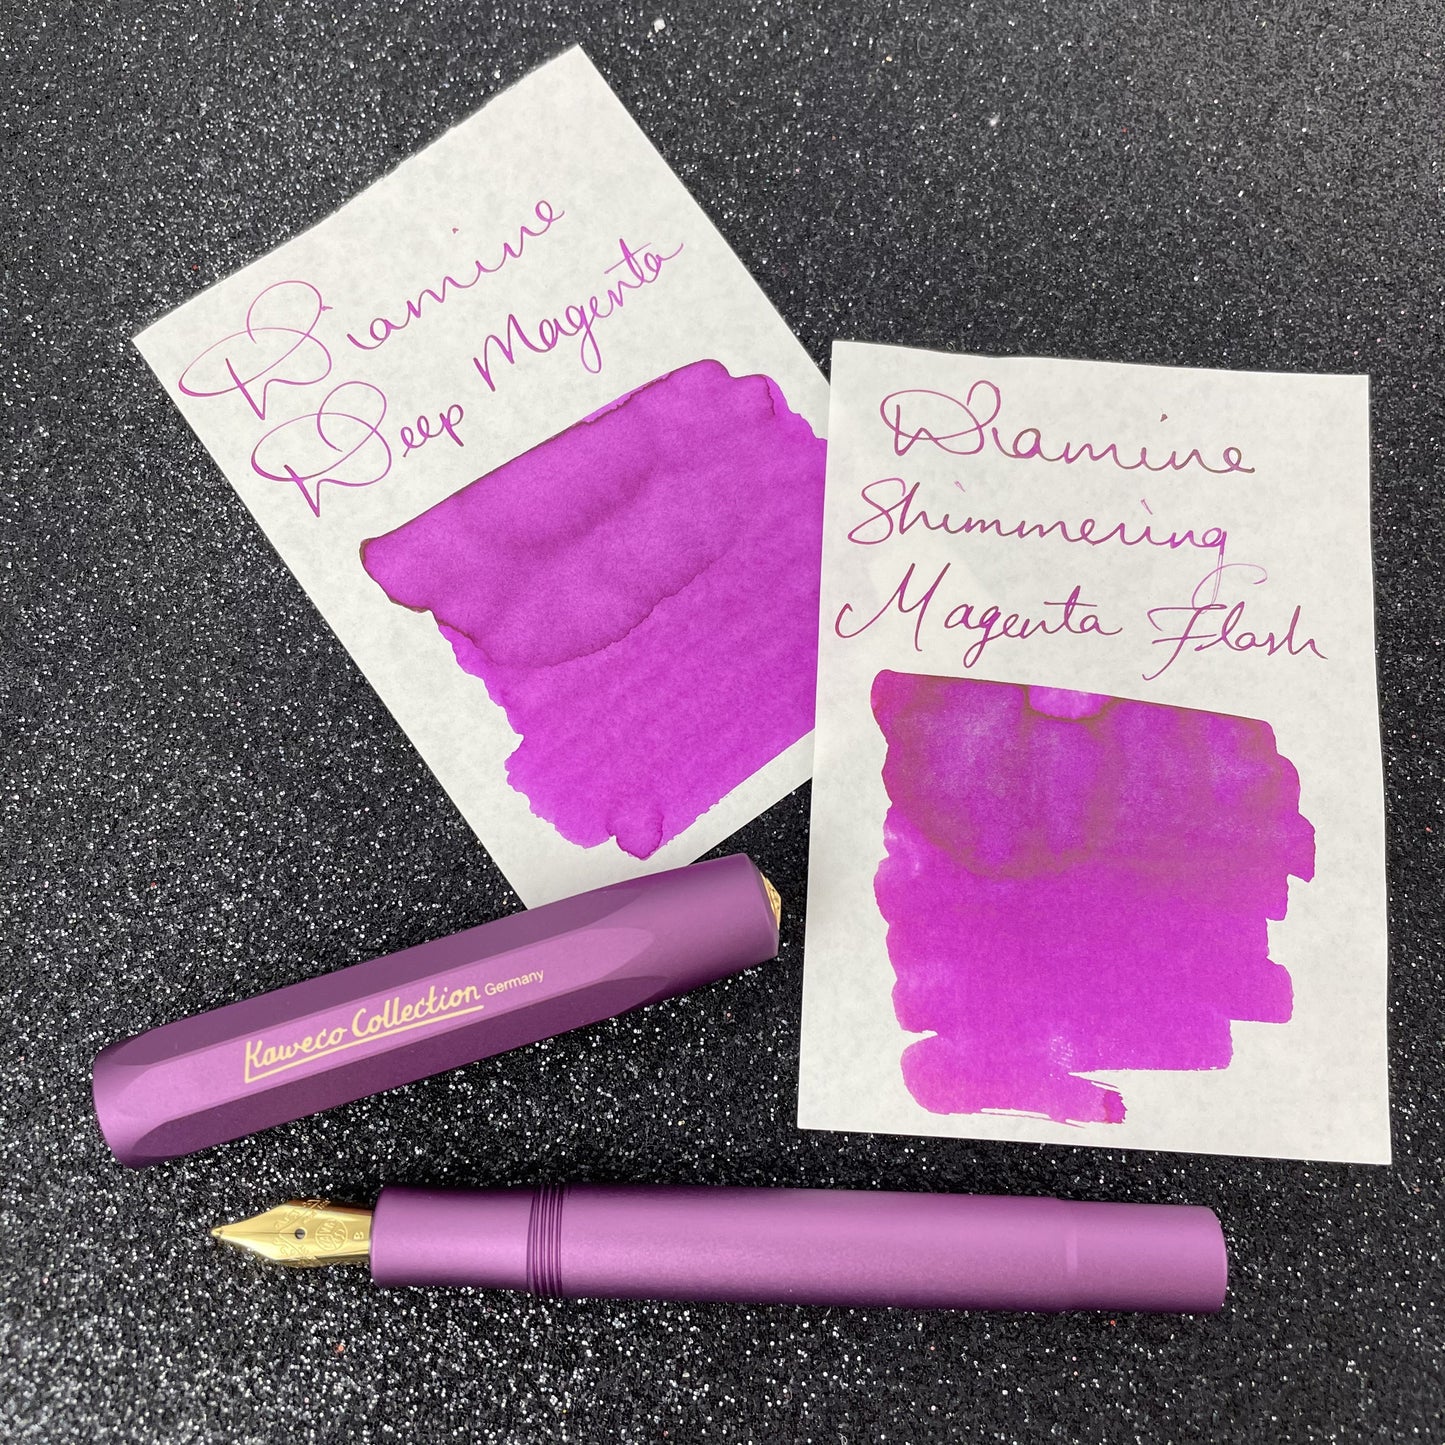 Kaweco AL Sport Fountain Pen - Vibrant Violet (Collector's Edition)